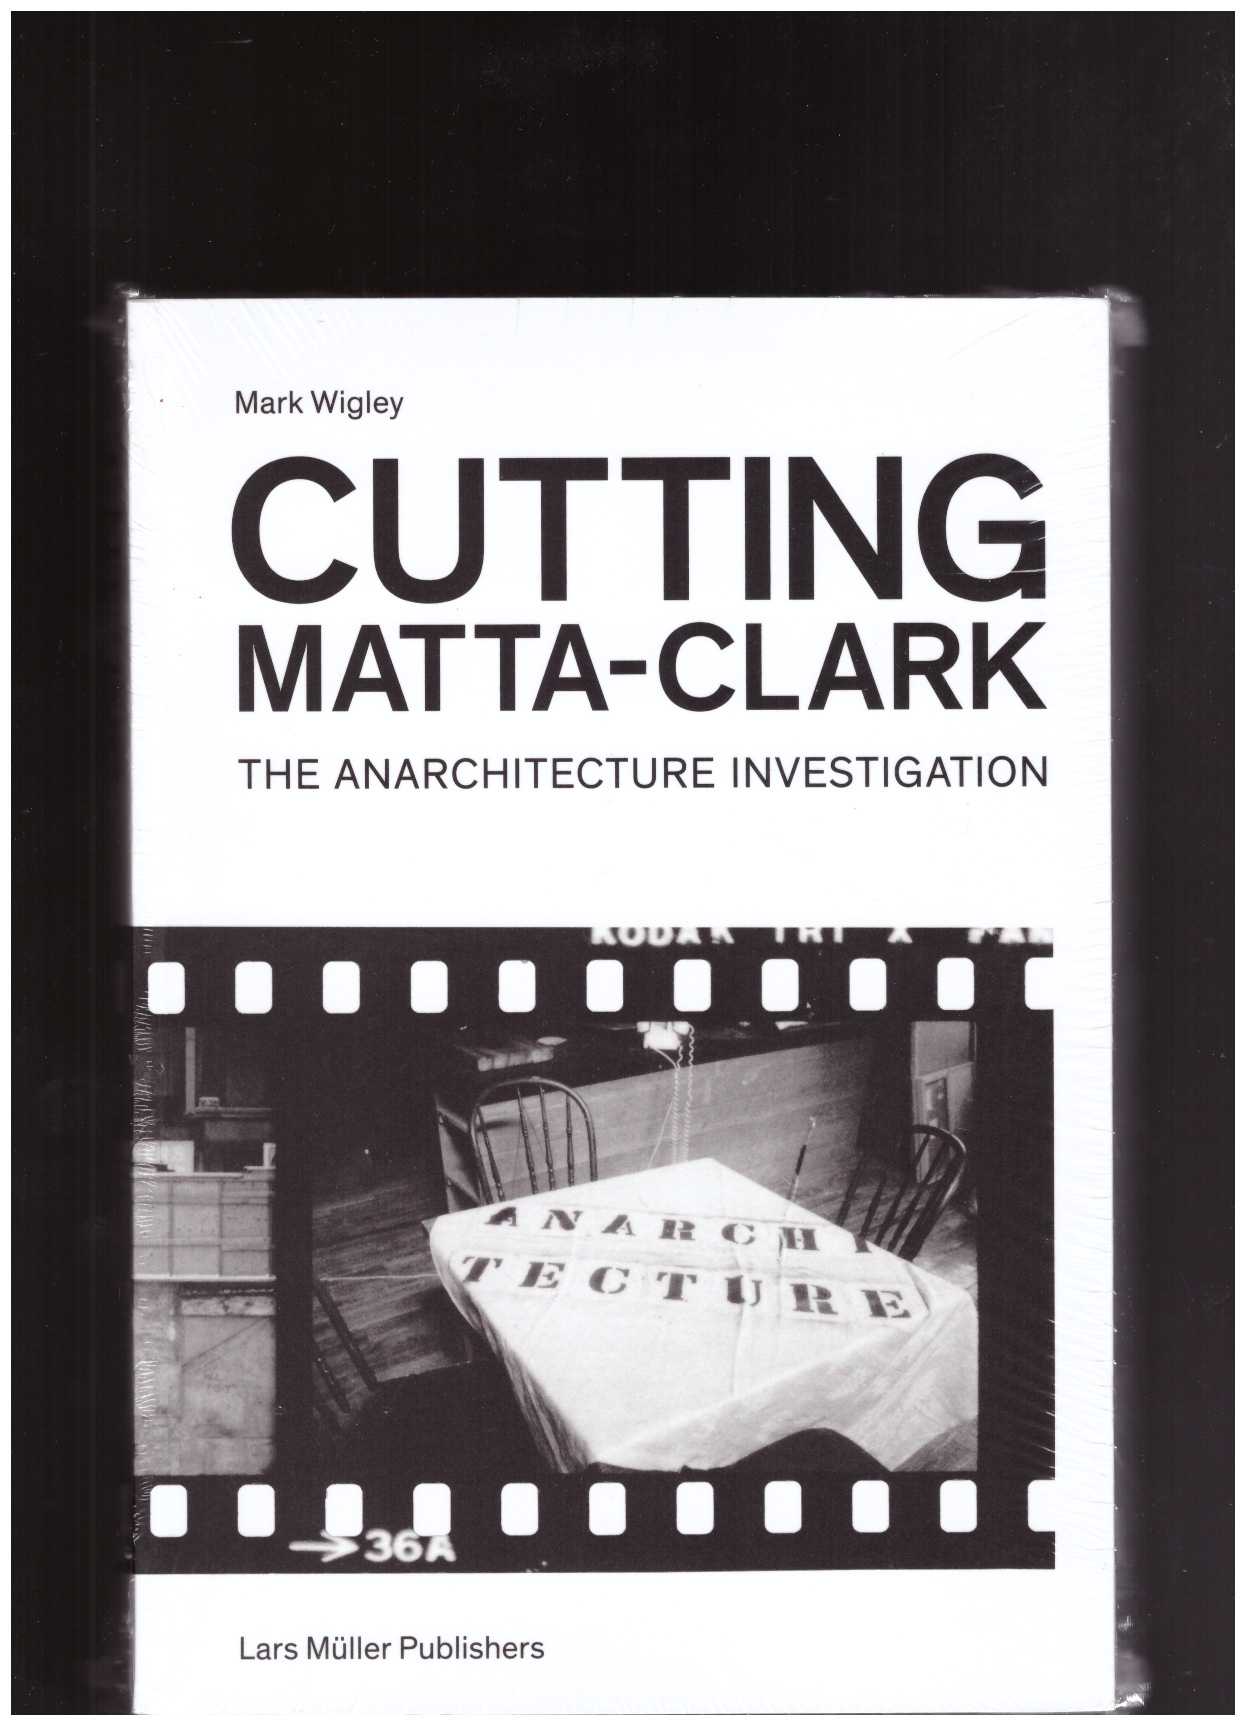 WIGLEY, Mark - Cutting Matta-Clark. The Anarchitecture Investigation